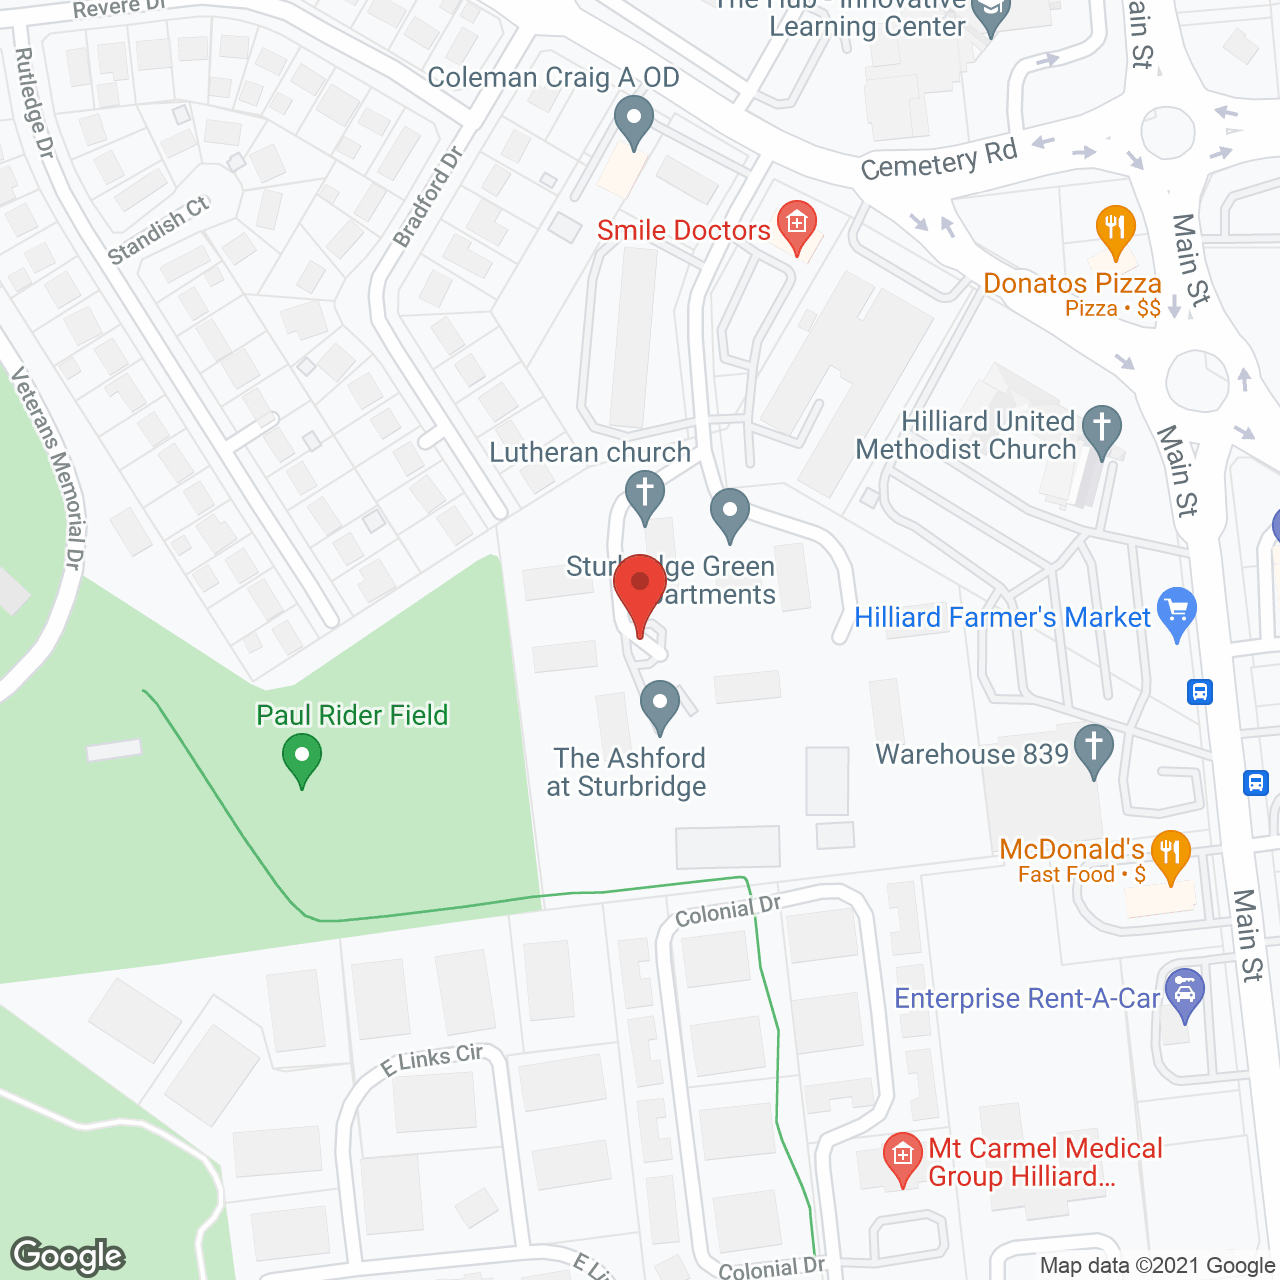 The Ashford at Sturbridge in google map